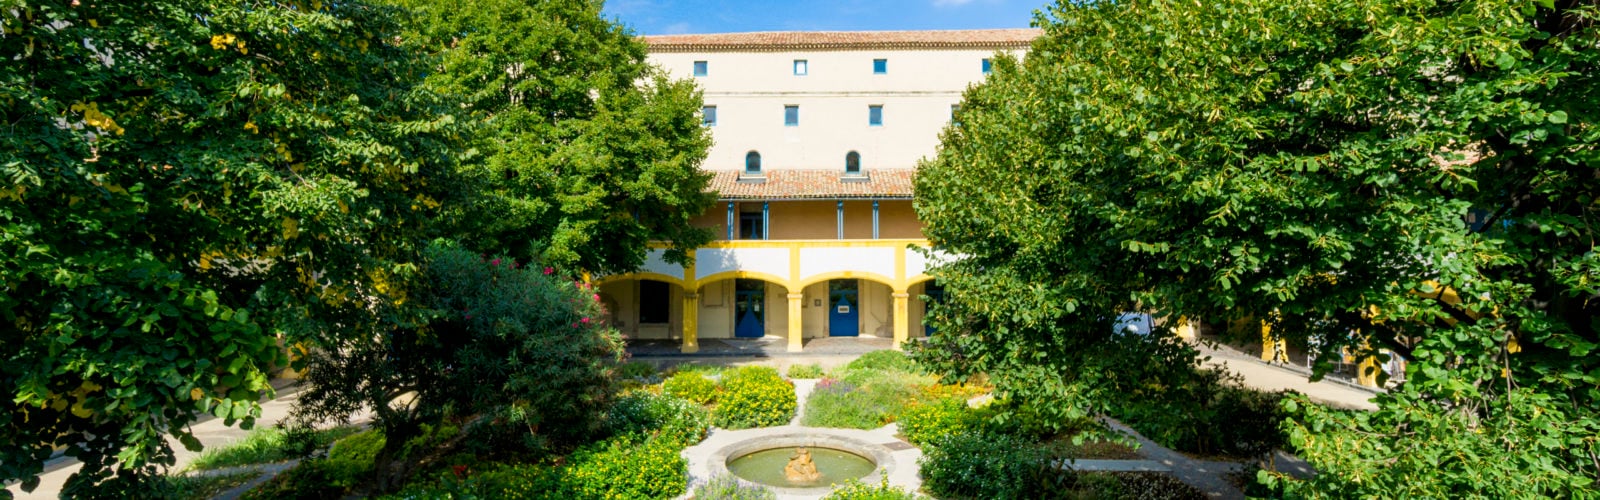 Arles-hospital-courtyard